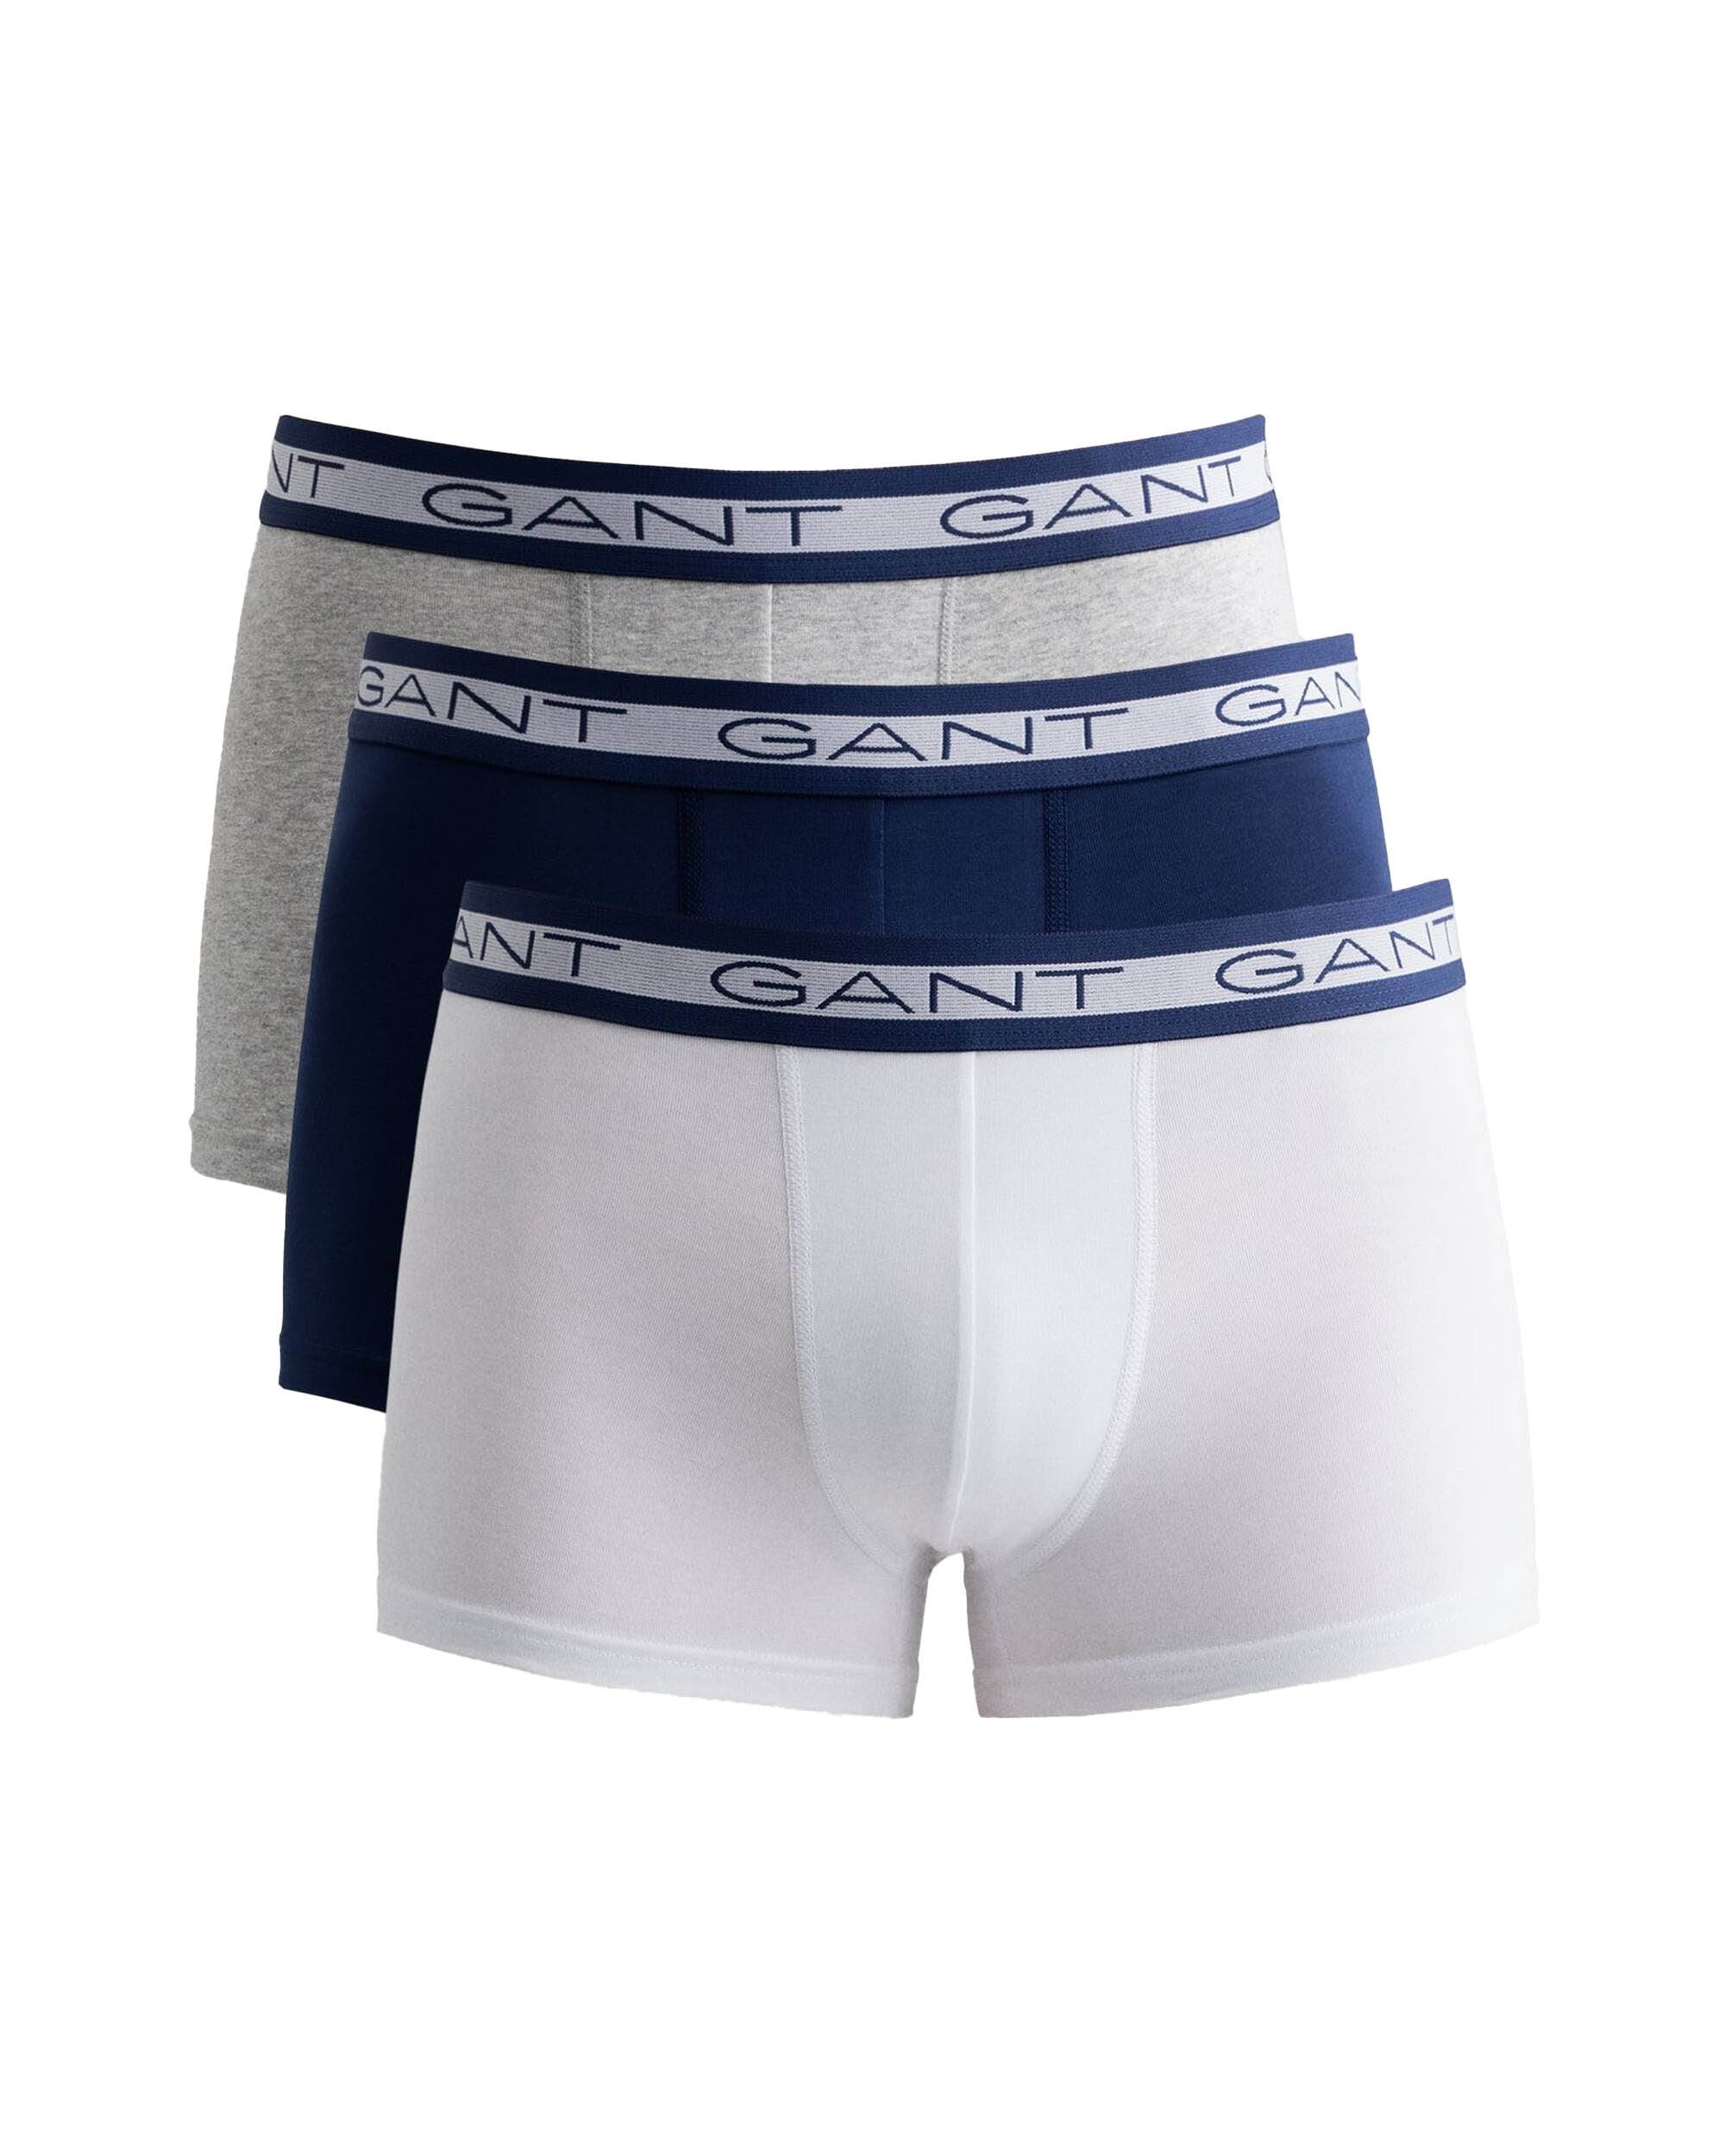 Gant Boxer Herren Boxer Shorts, 3er Pack - Trunks, Cotton Weiß/Blau/Grau